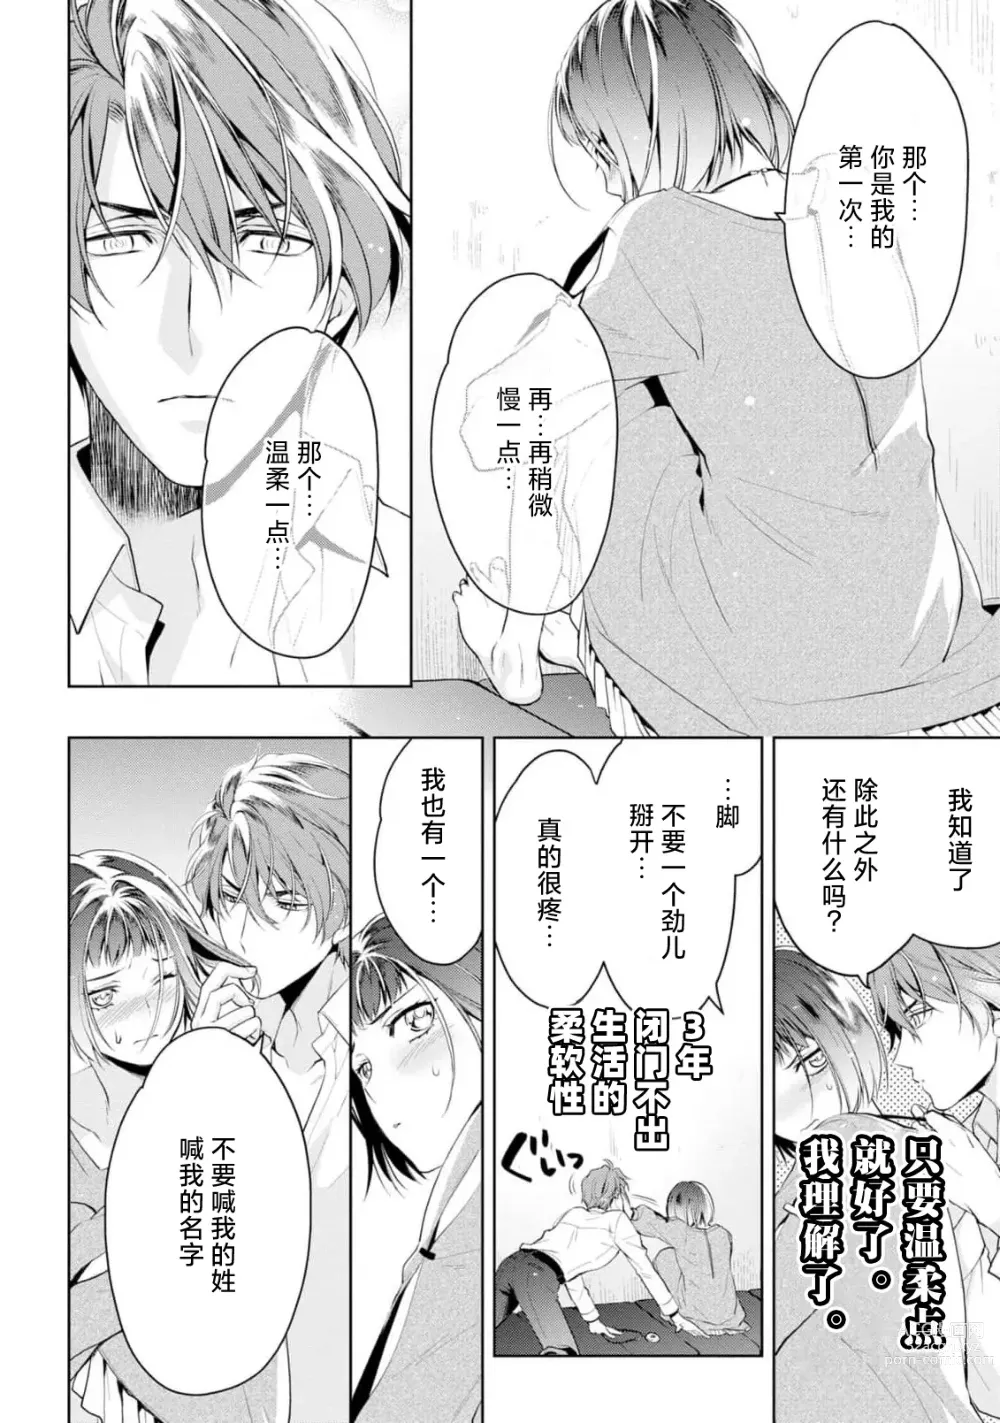 Page 131 of manga 消极小姐和乐观先生~触摸上司的那个并进行反击!?~ 1-5 + Extra